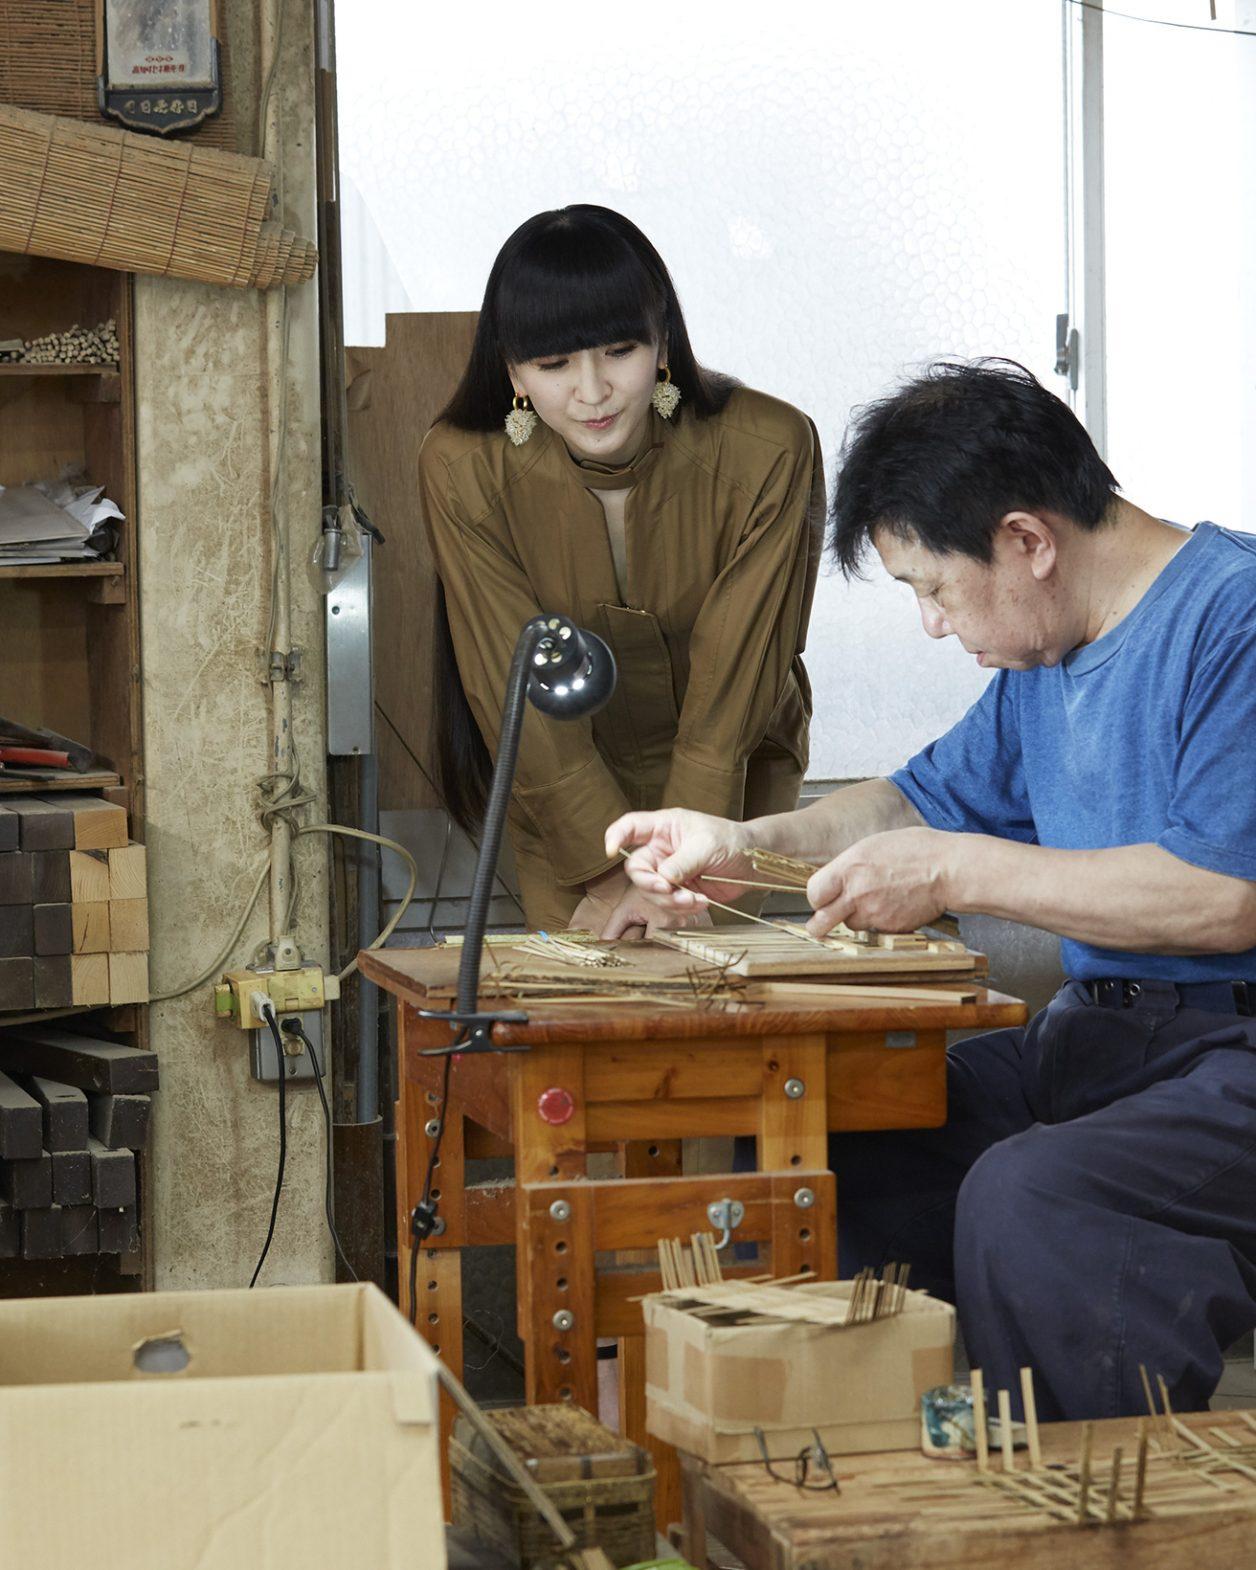 Kokontozai: KASHIYUKA’s Shop of Japanese Arts and Crafts /[BAMBOO BASKET]